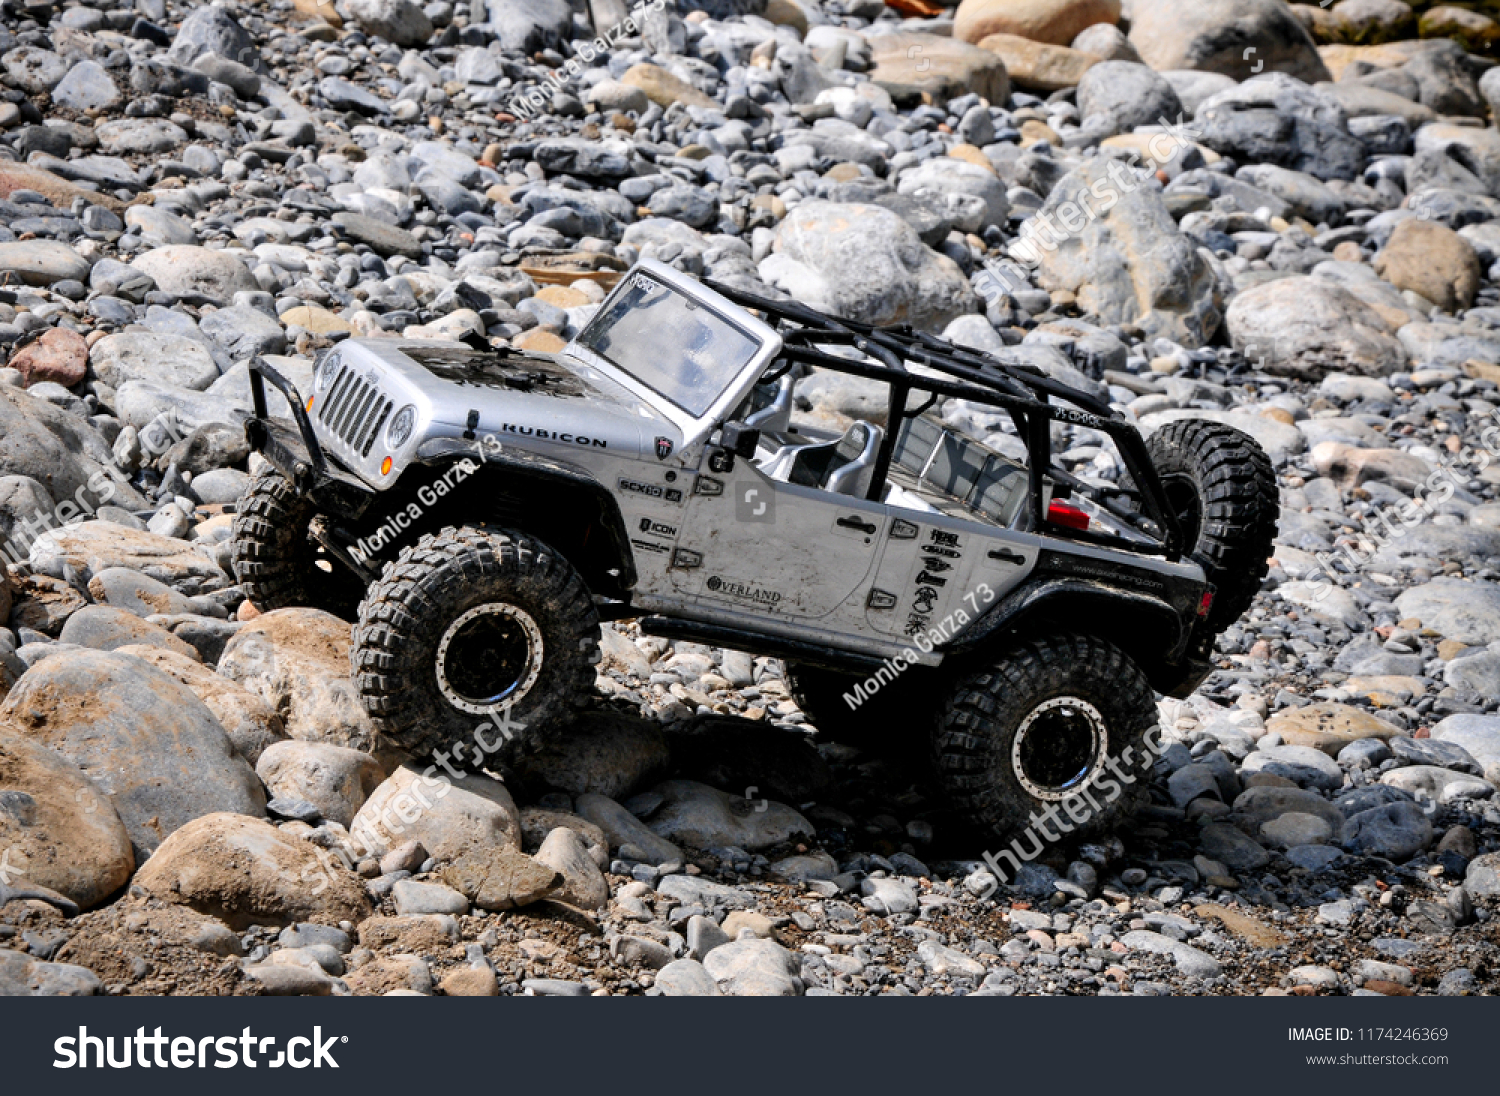 remote control jeep toy